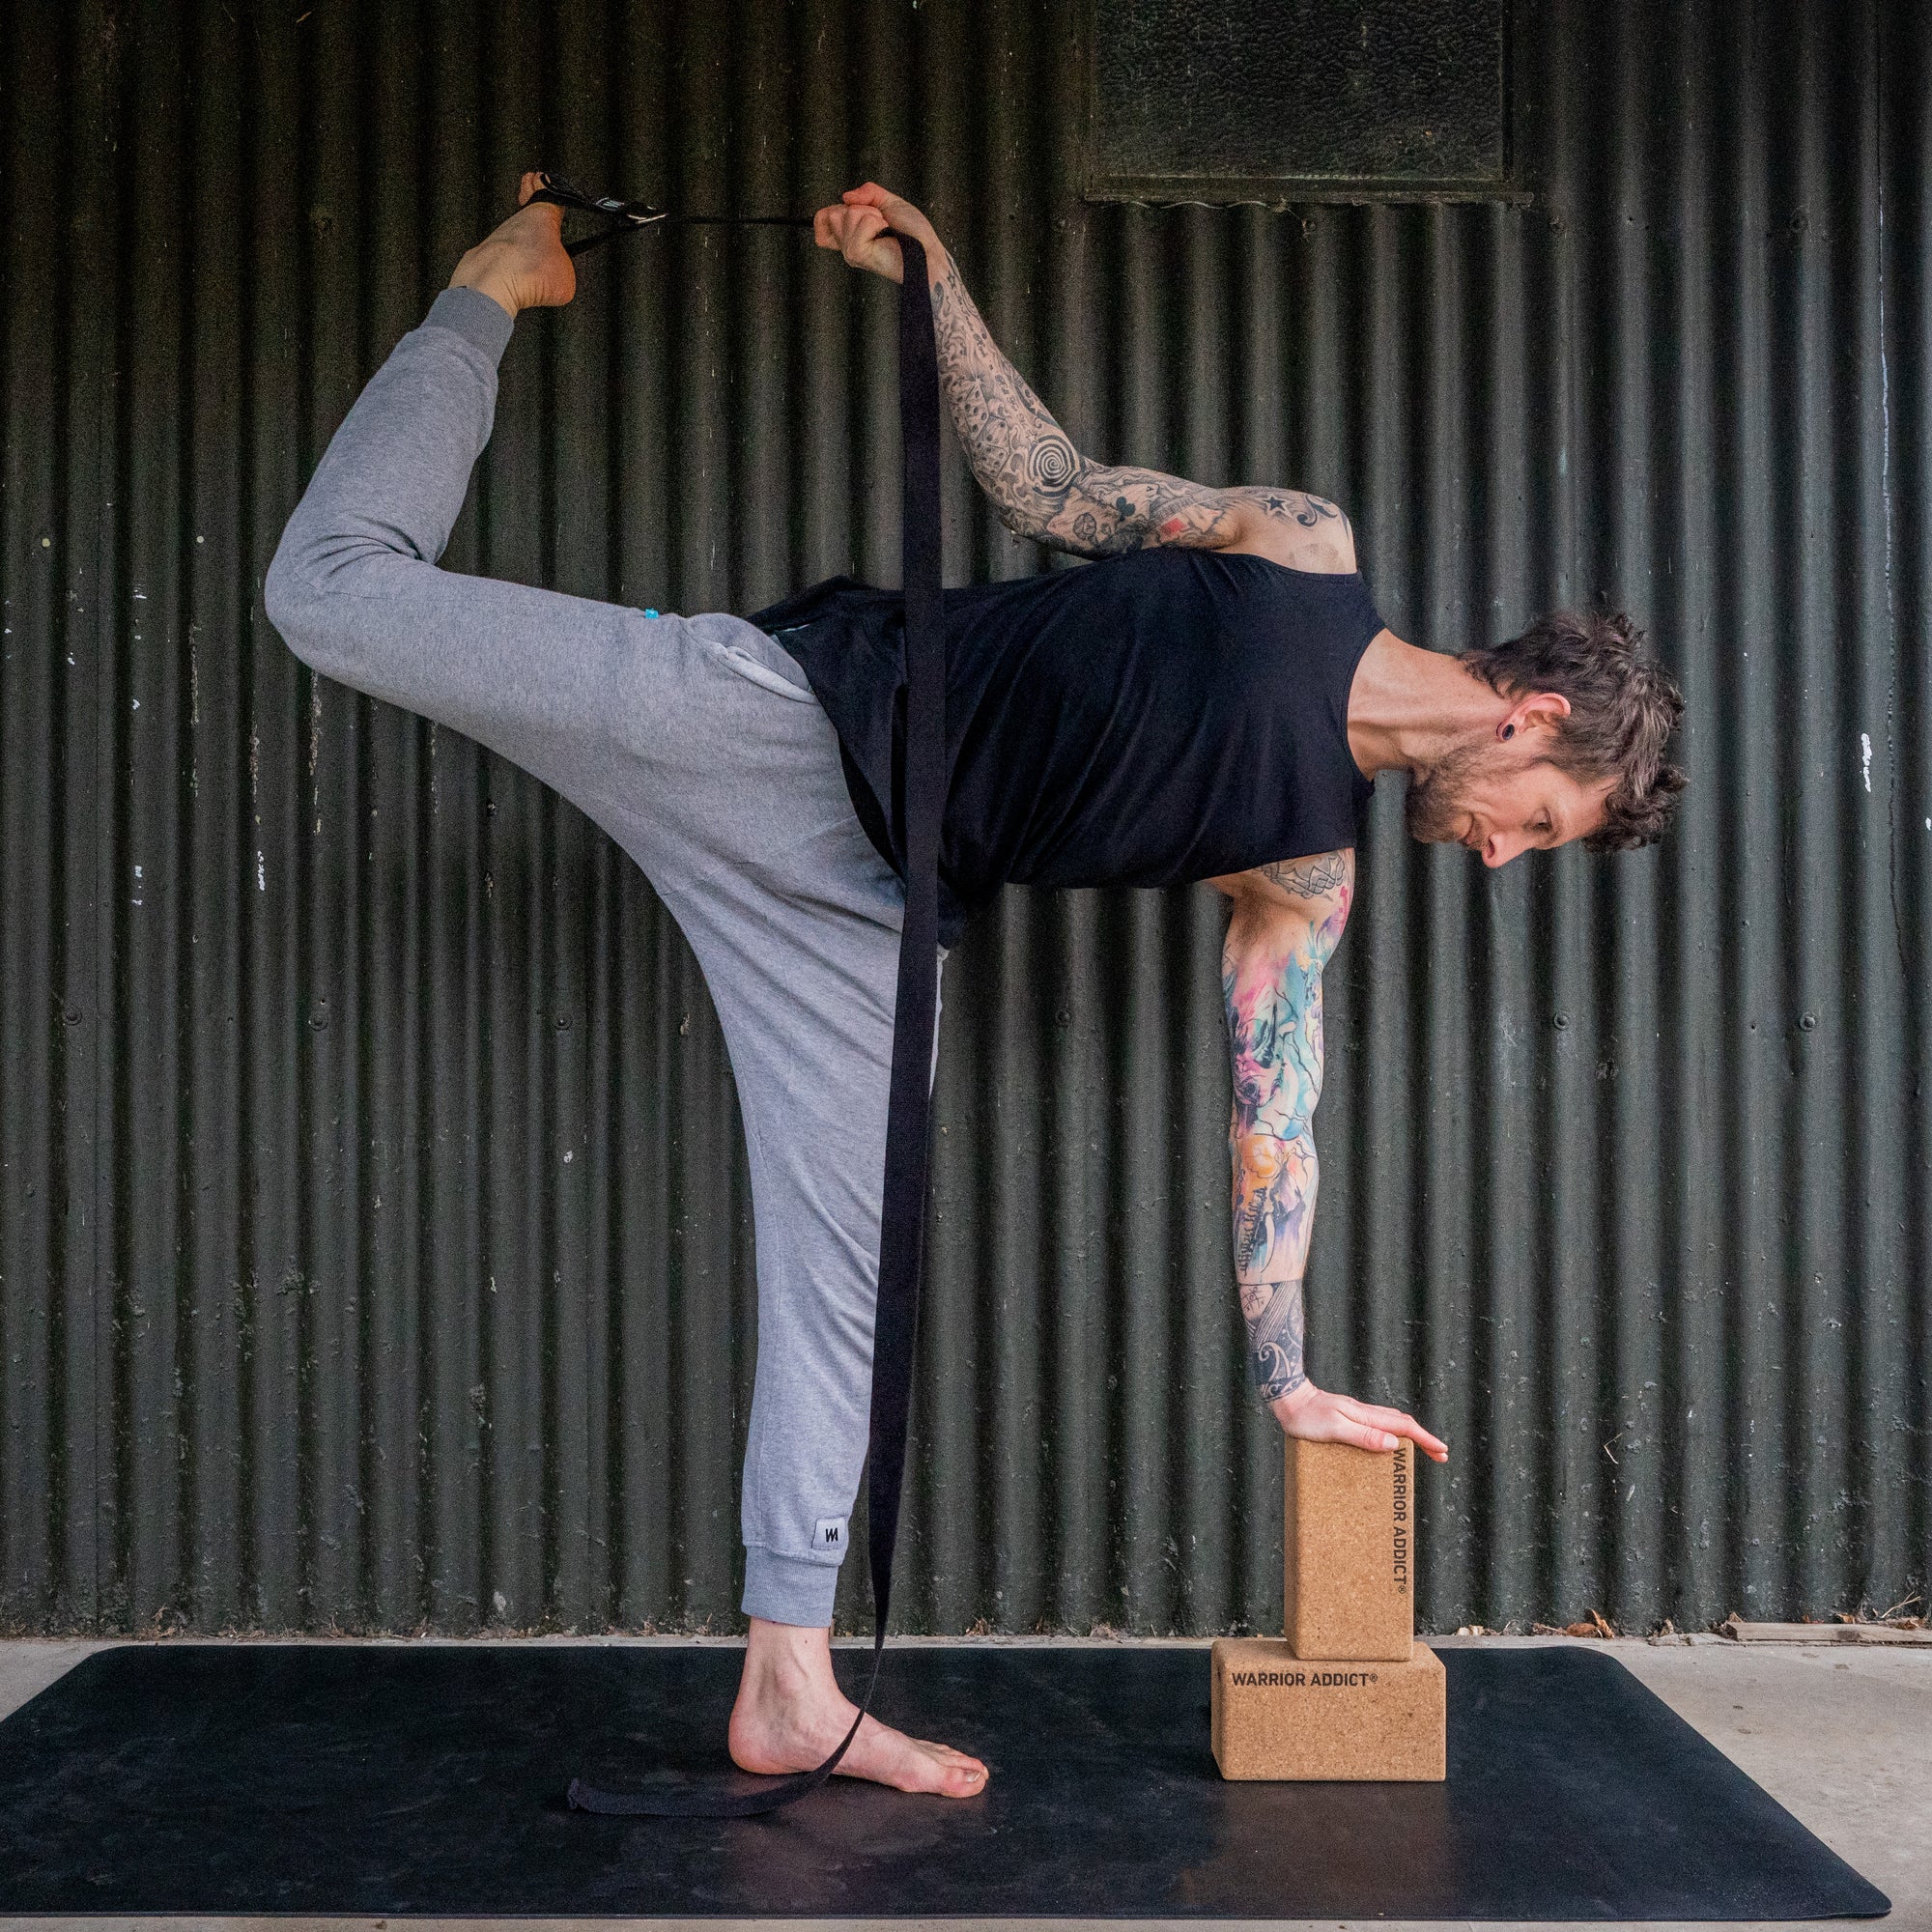 Cork Yoga Blocks By Warrior Addict